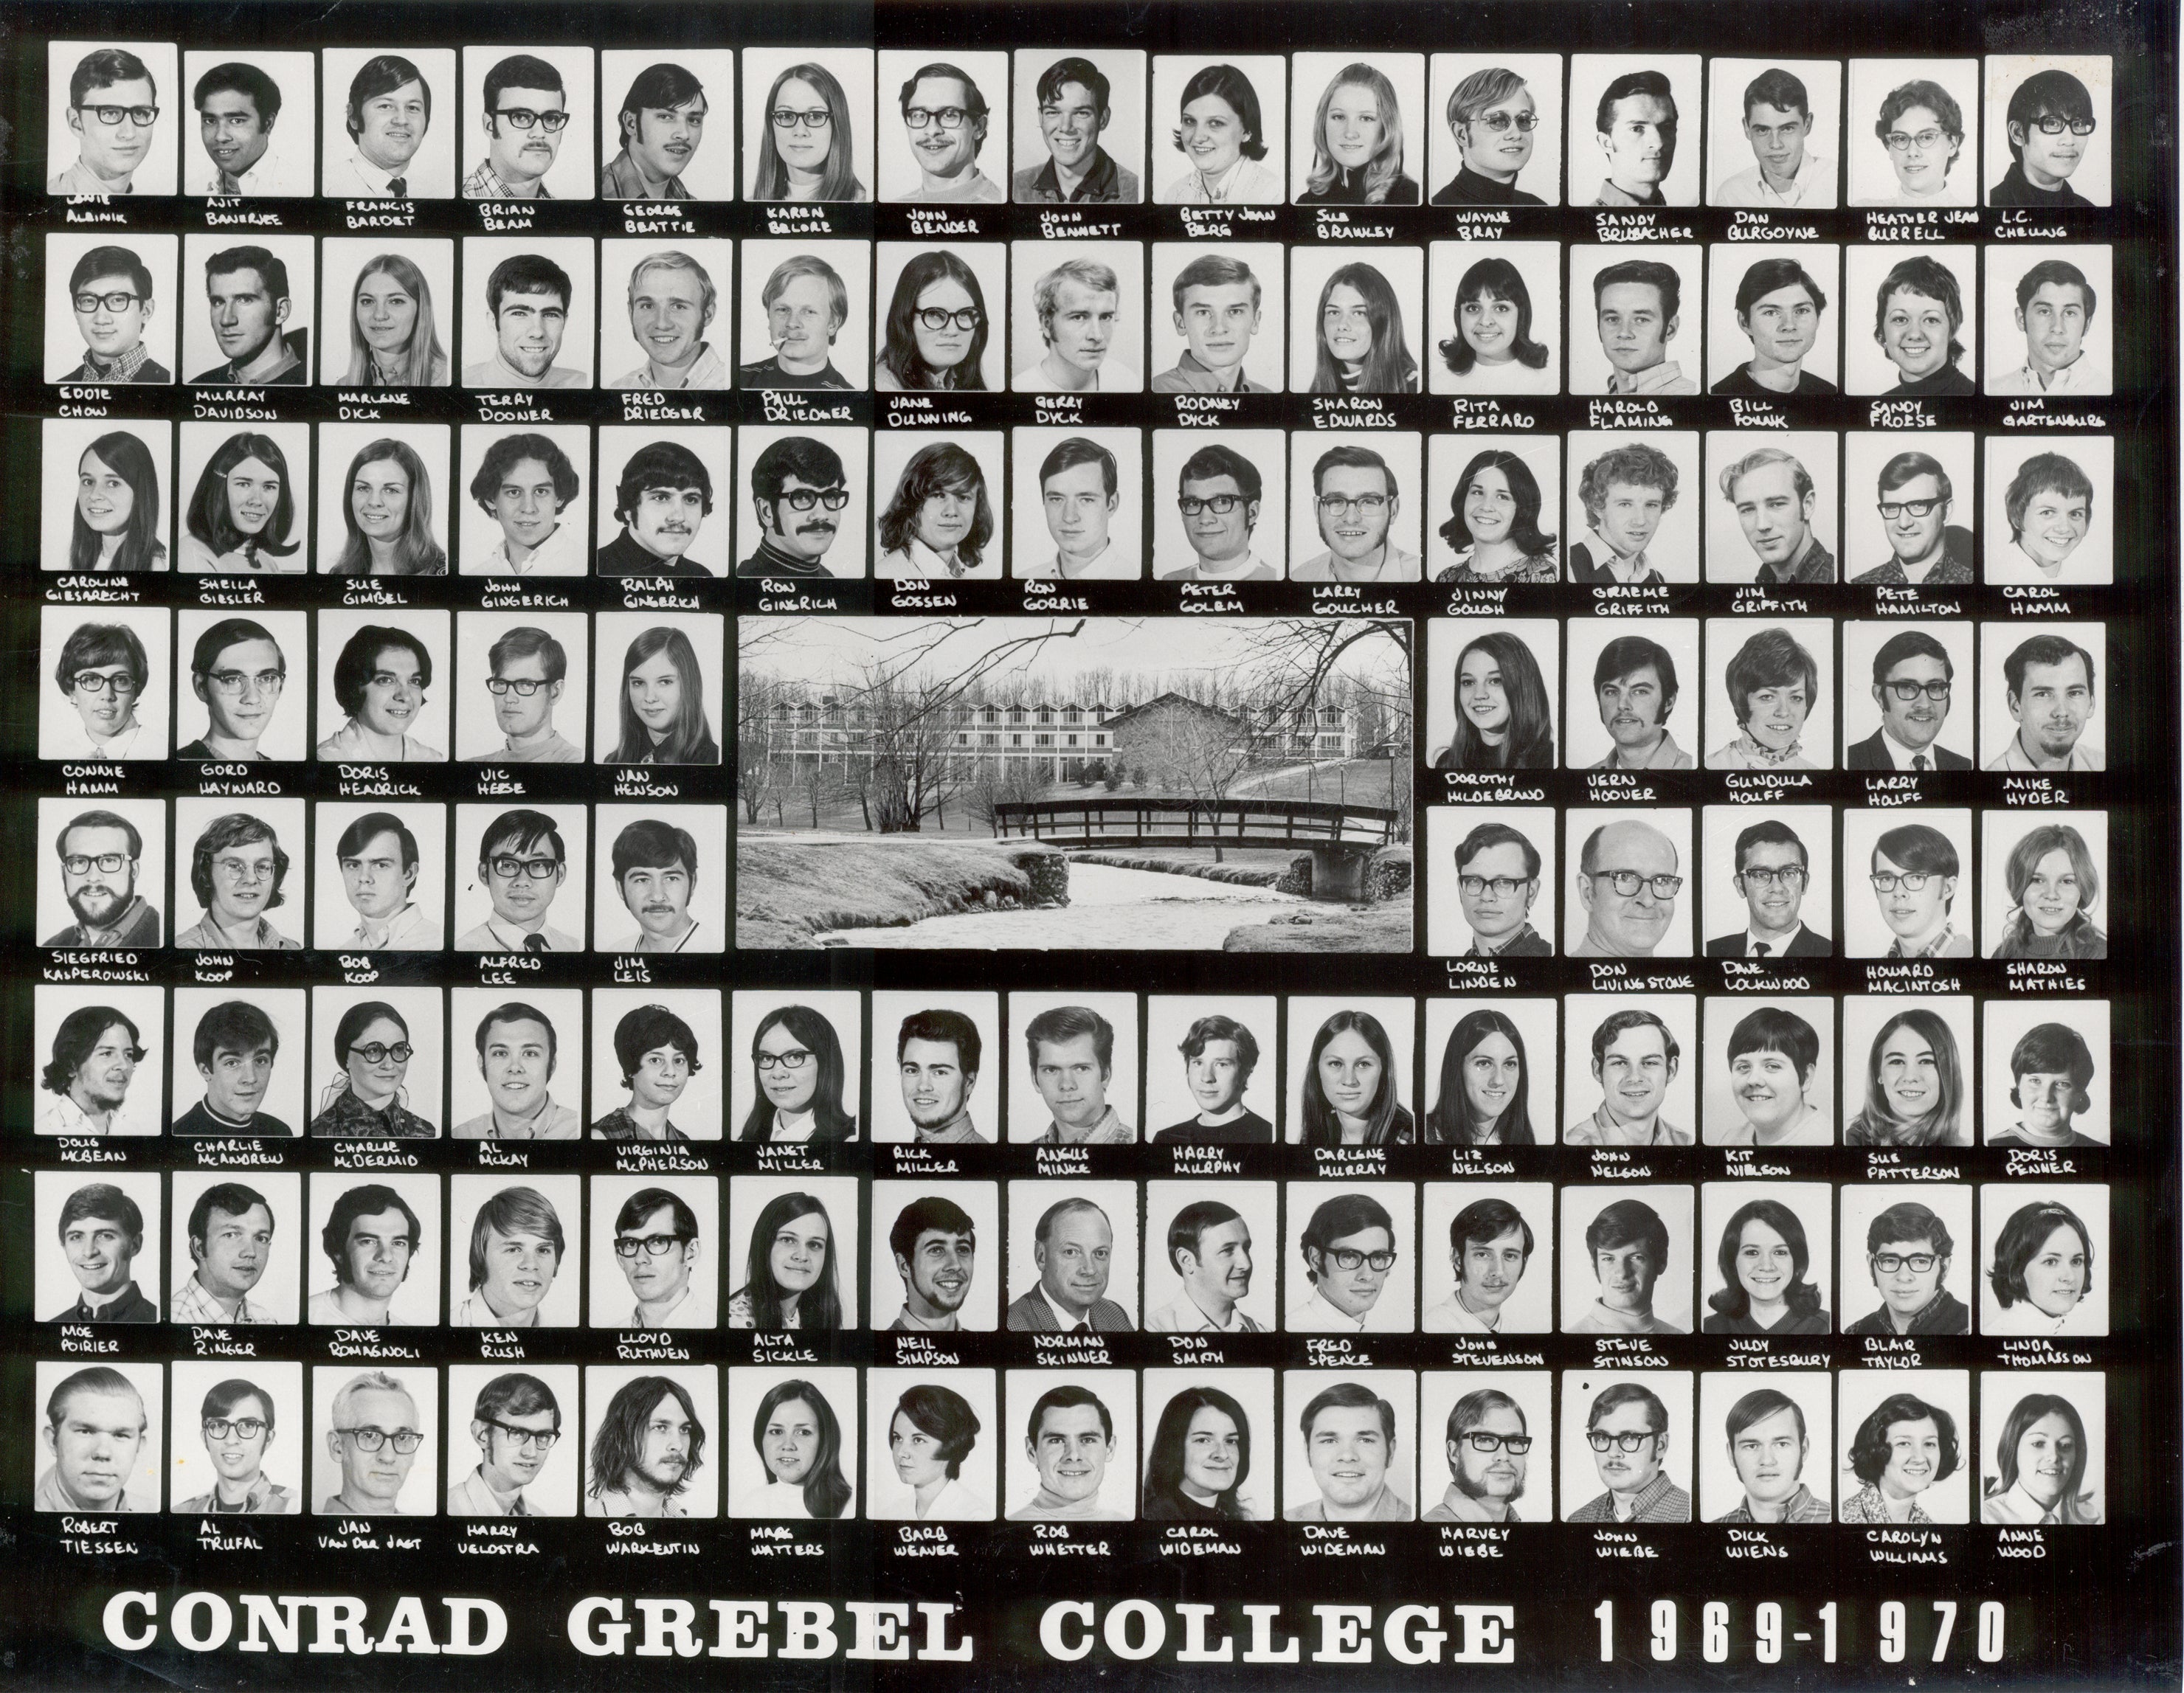 All College 1969-1970